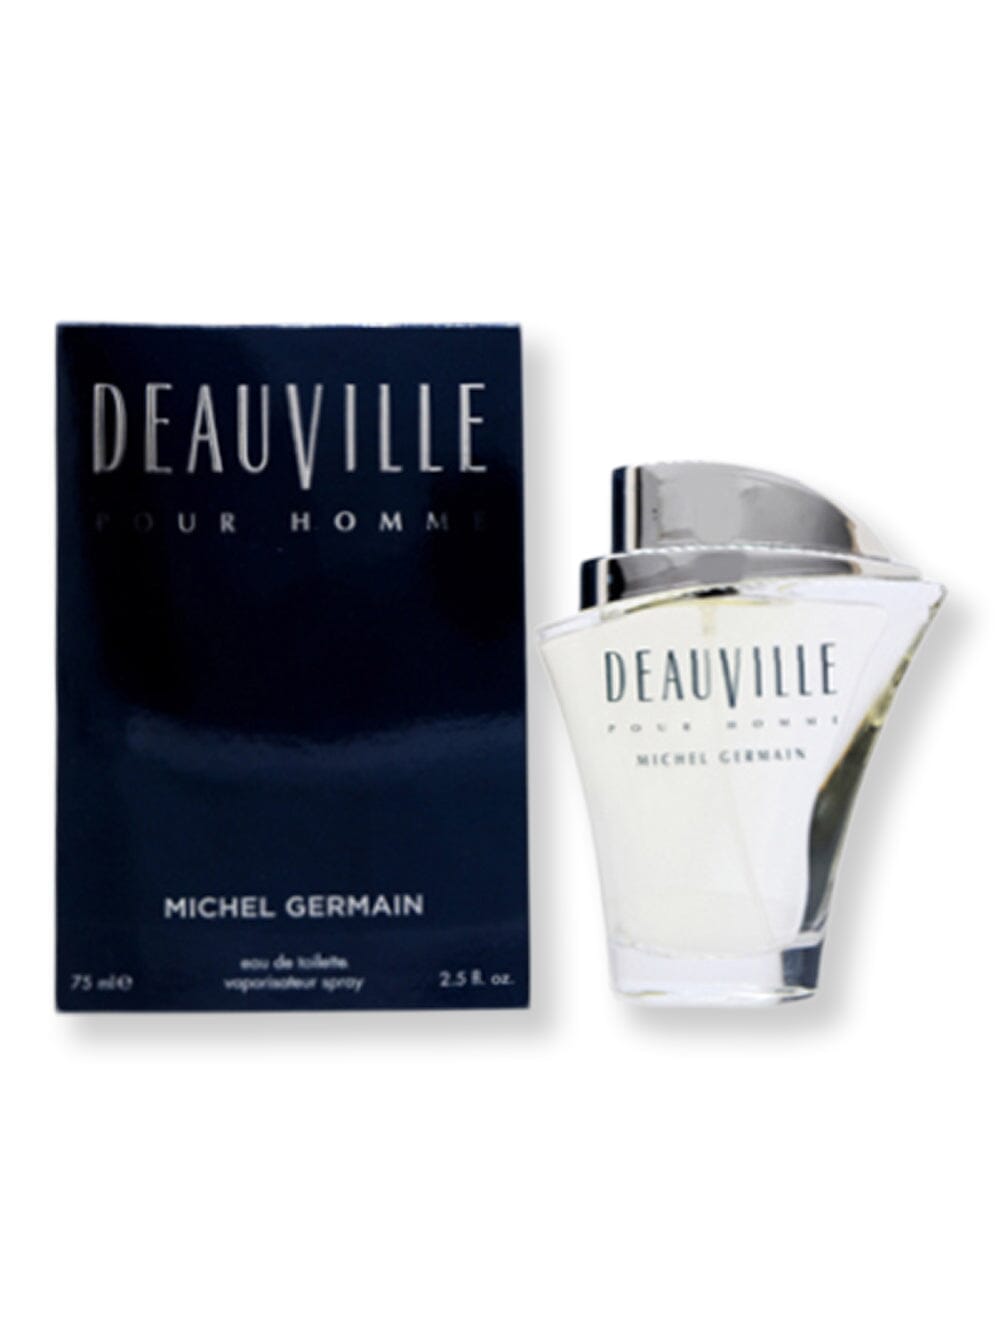 Michel Germain Michel Germain Deauville EDT Spray 2.5 oz75 ml Perfume 